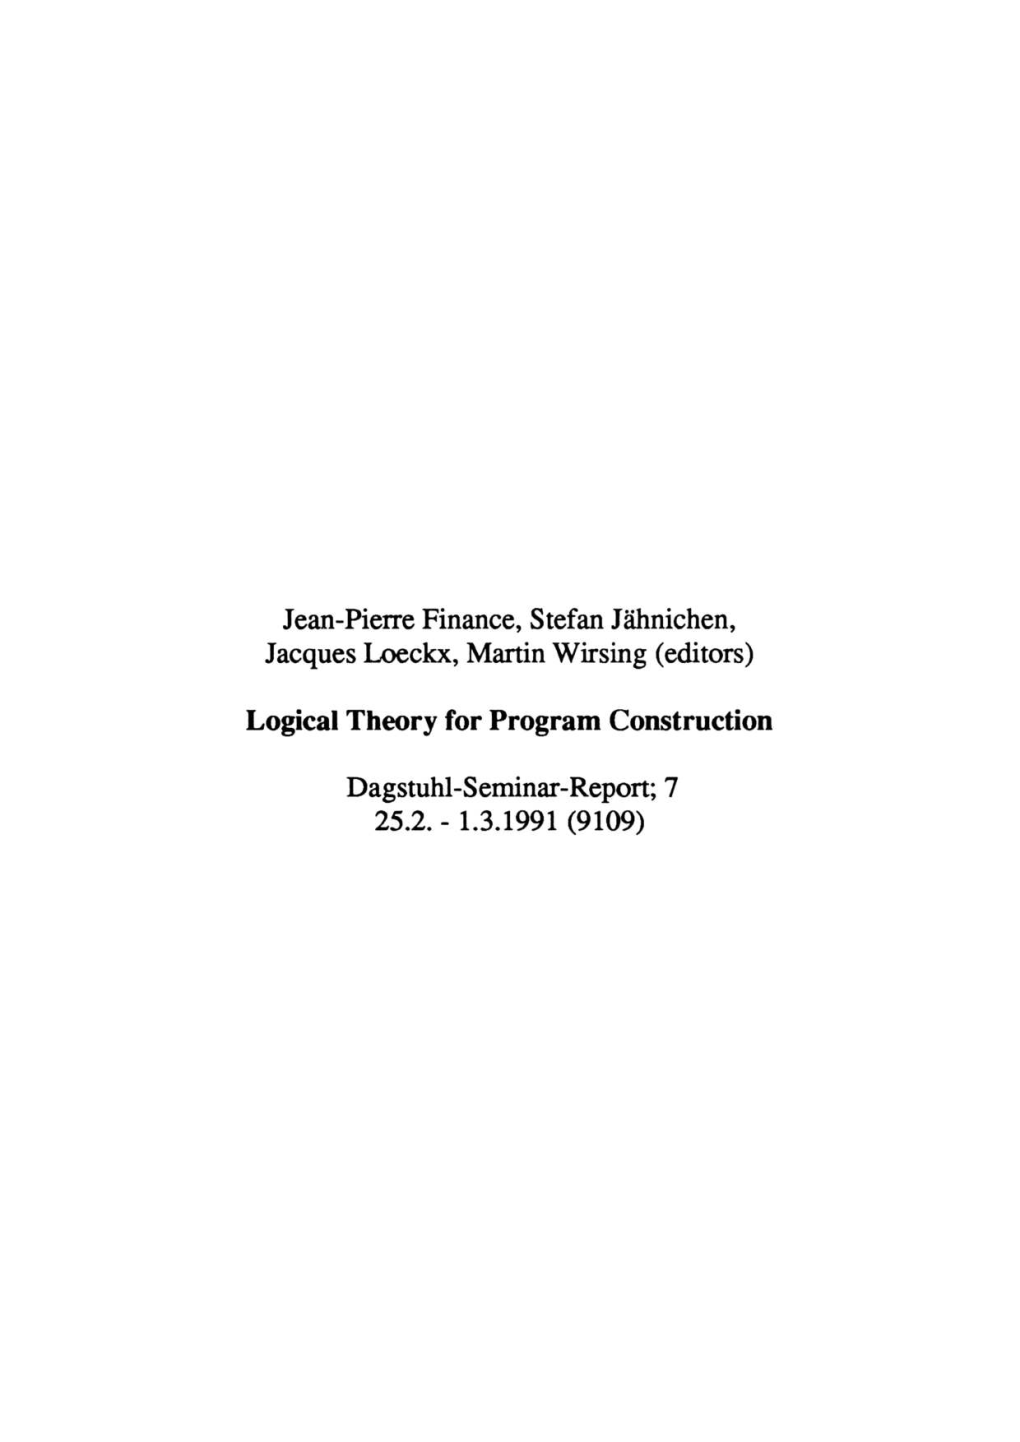 (Editors) Logical Theory for Program Construction Dagstuhl-Seminar